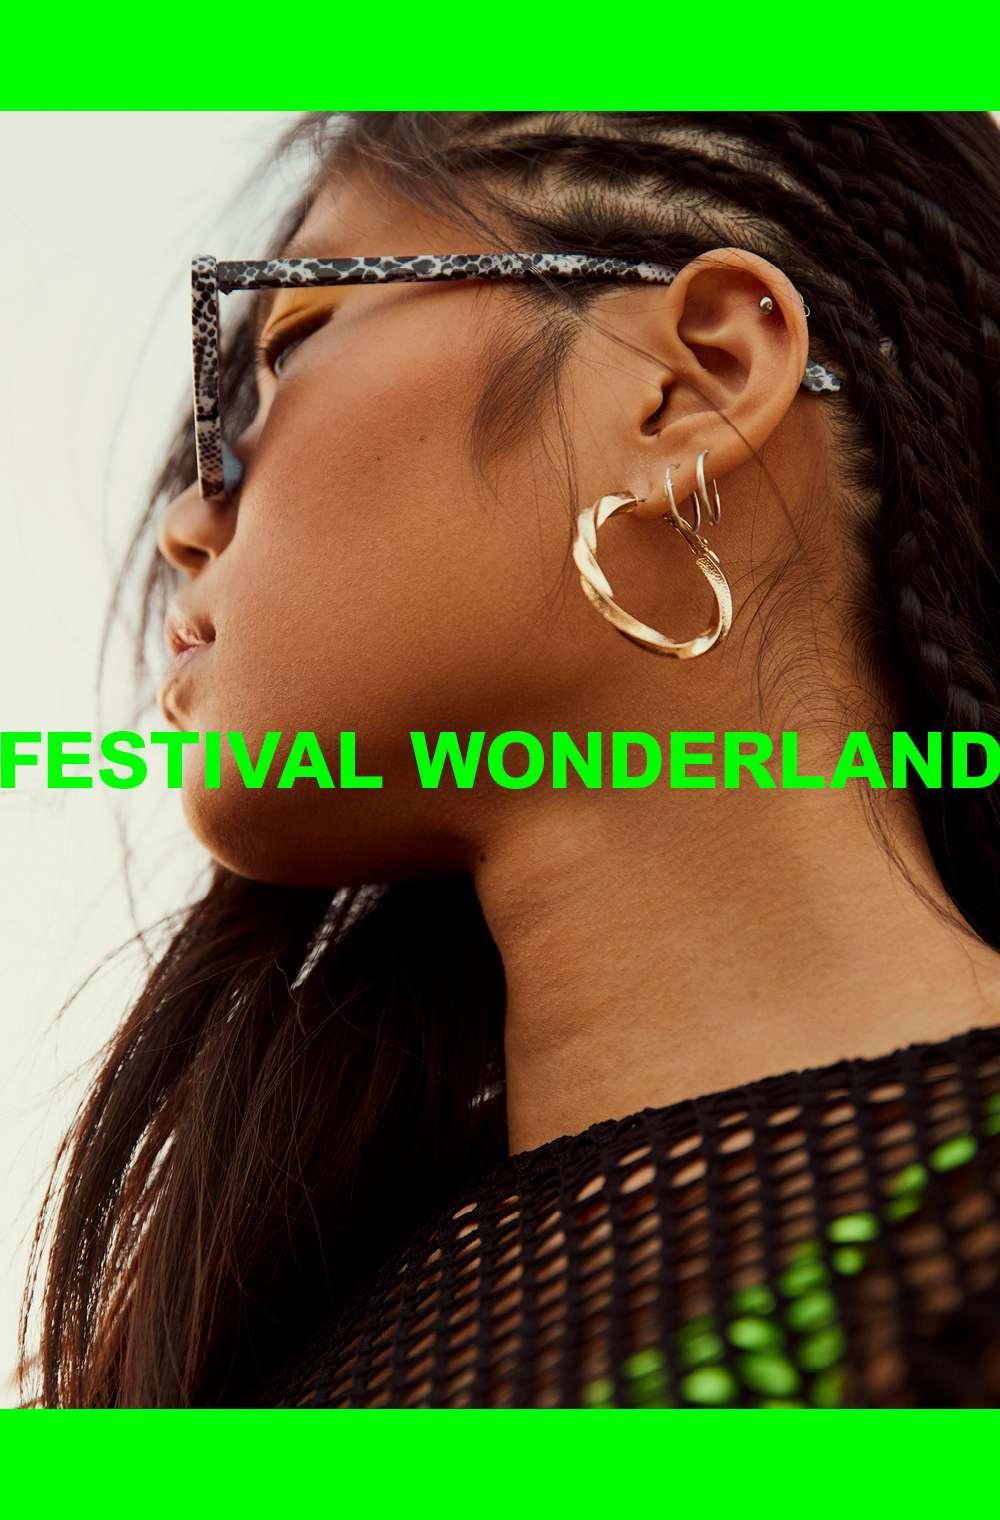 Primark Womenswear Festival Wonderland Image